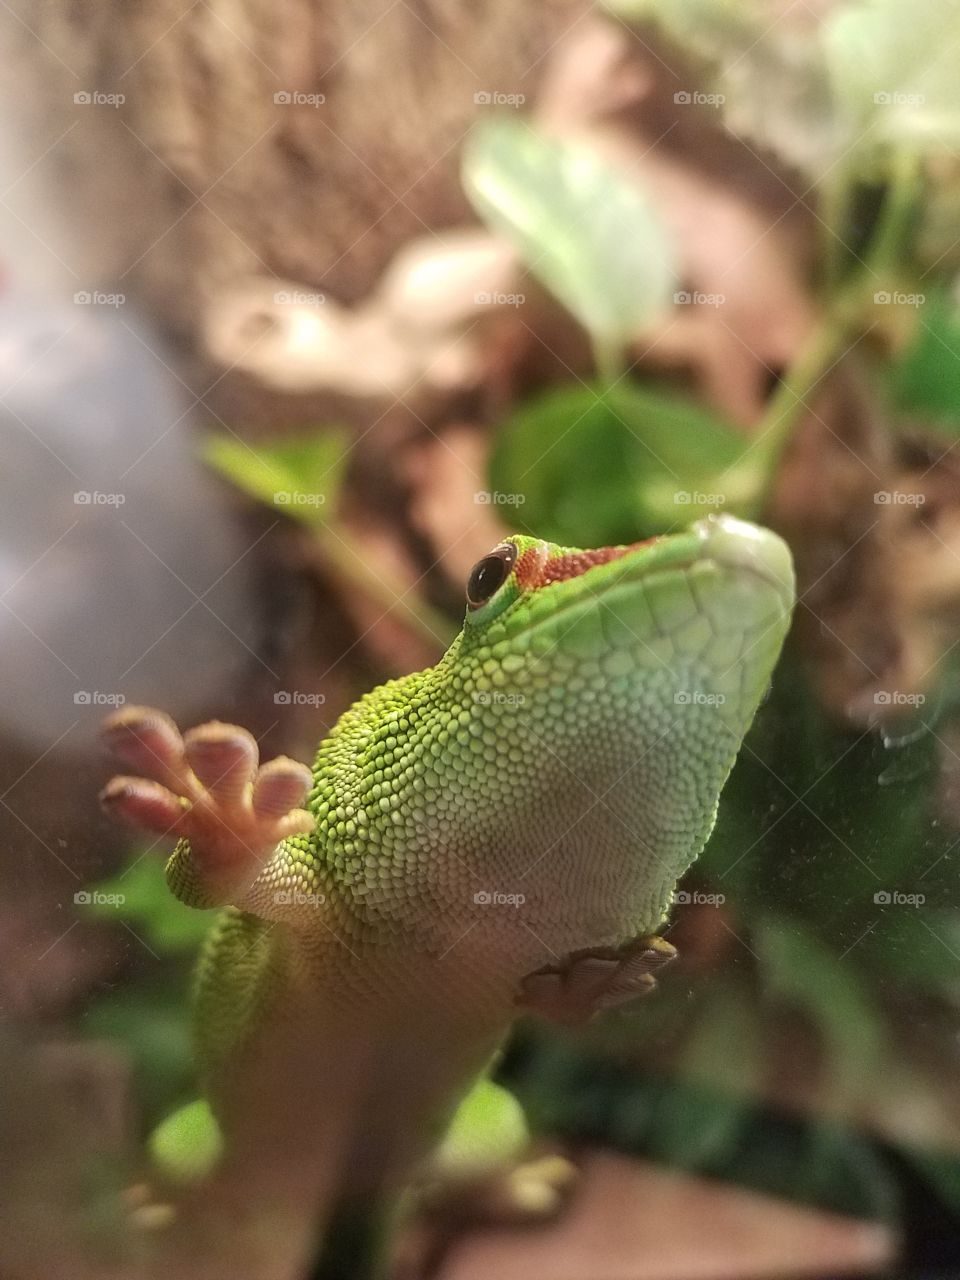 giant Madagascar Green Day Gecko